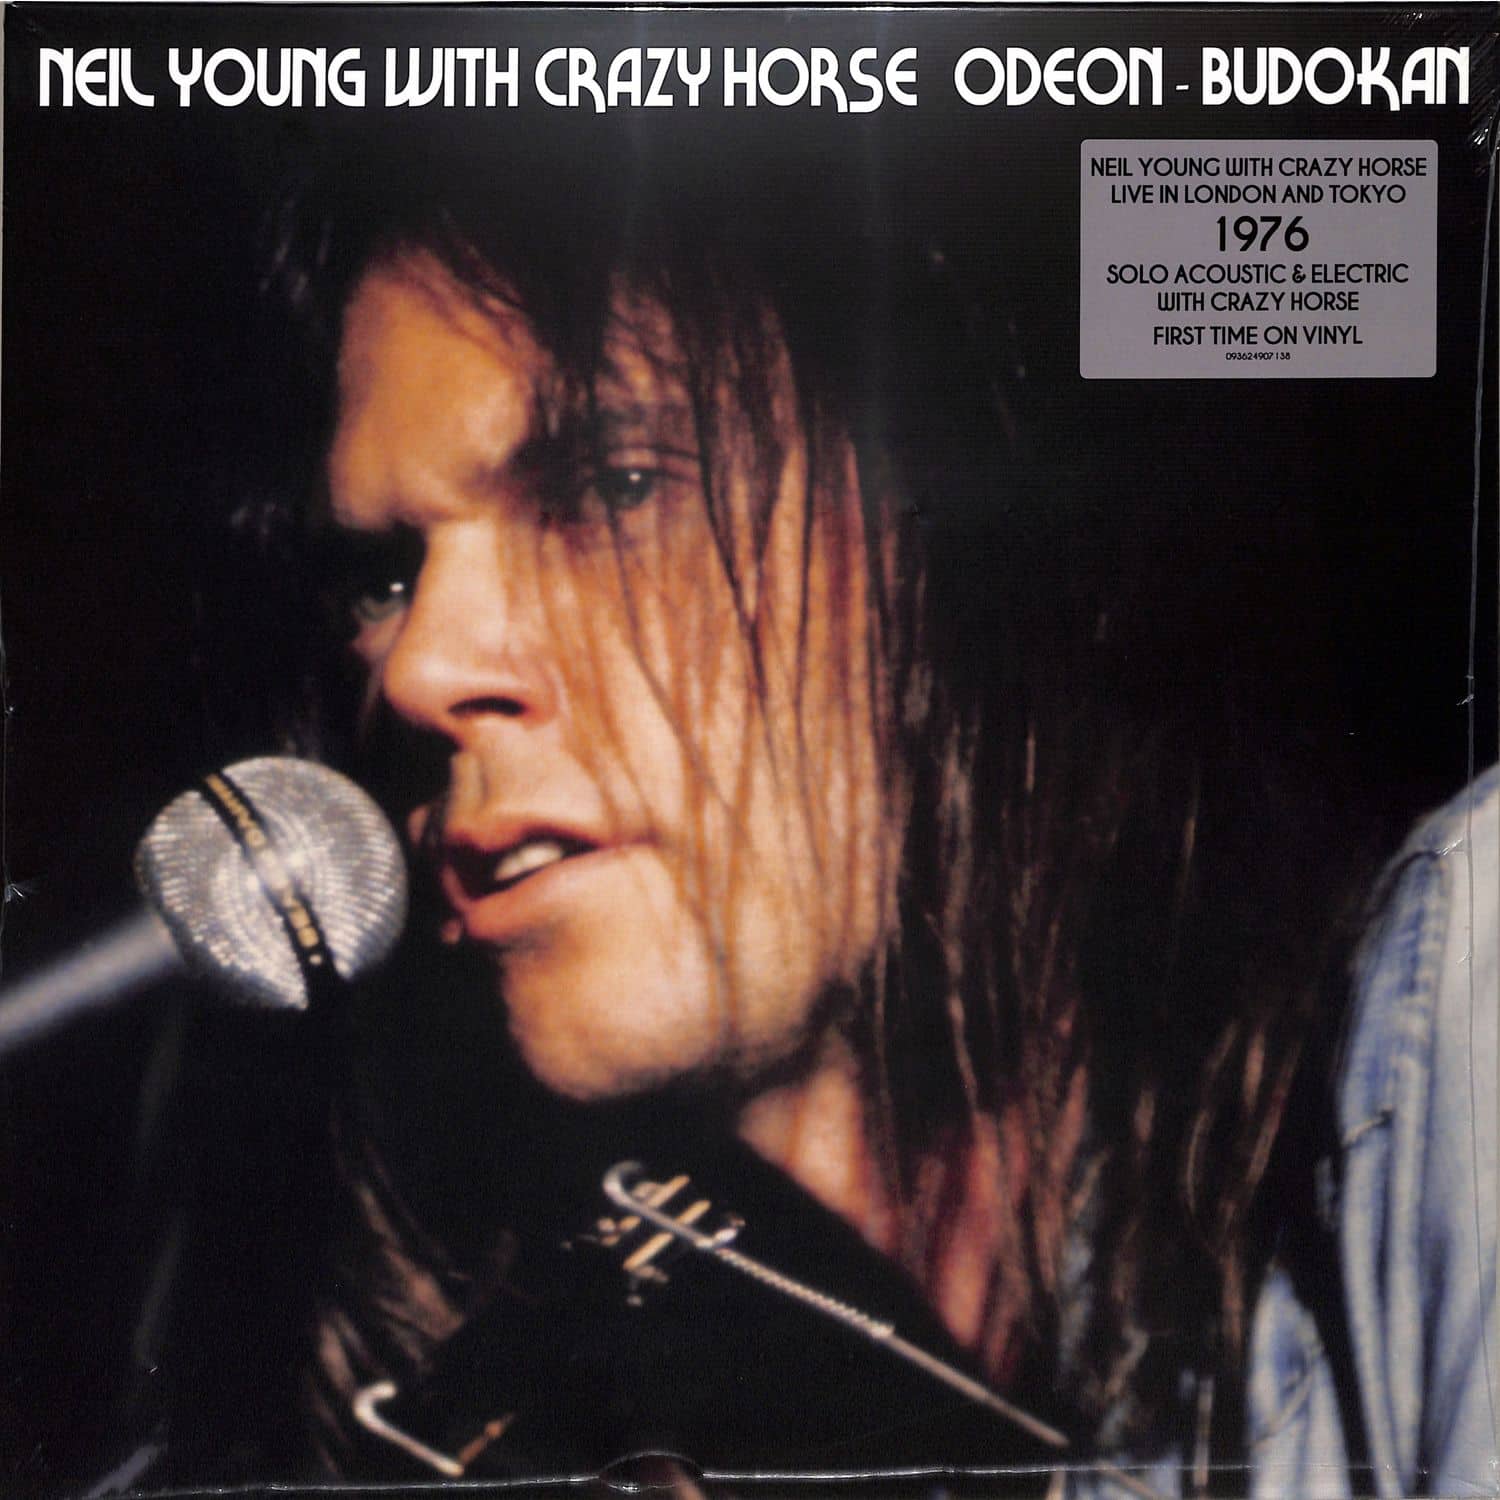 Neil Young & Crazy Horse - ODEON BUDOKAN 